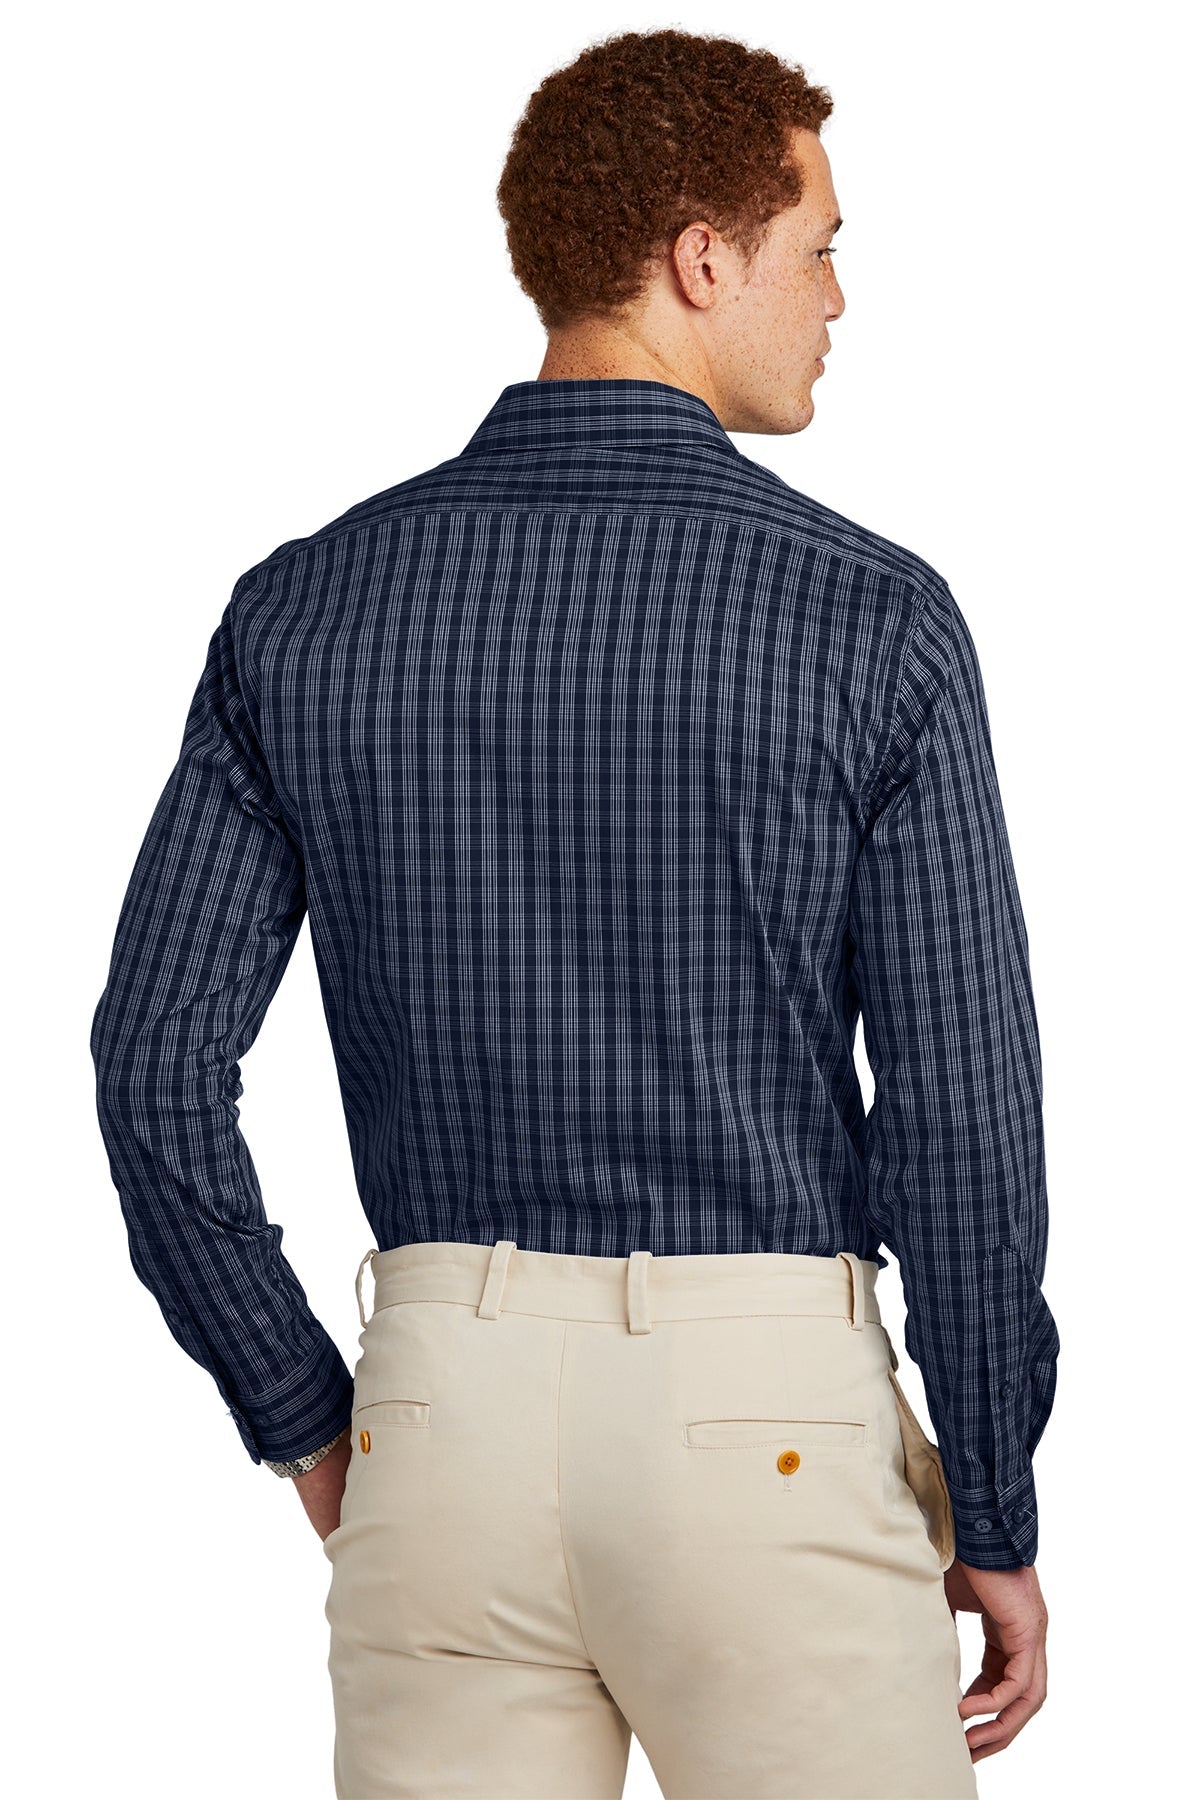 Brooks Brothers Tech Stretch Patterned Shirt, Navy Blazer/ White Grid Check